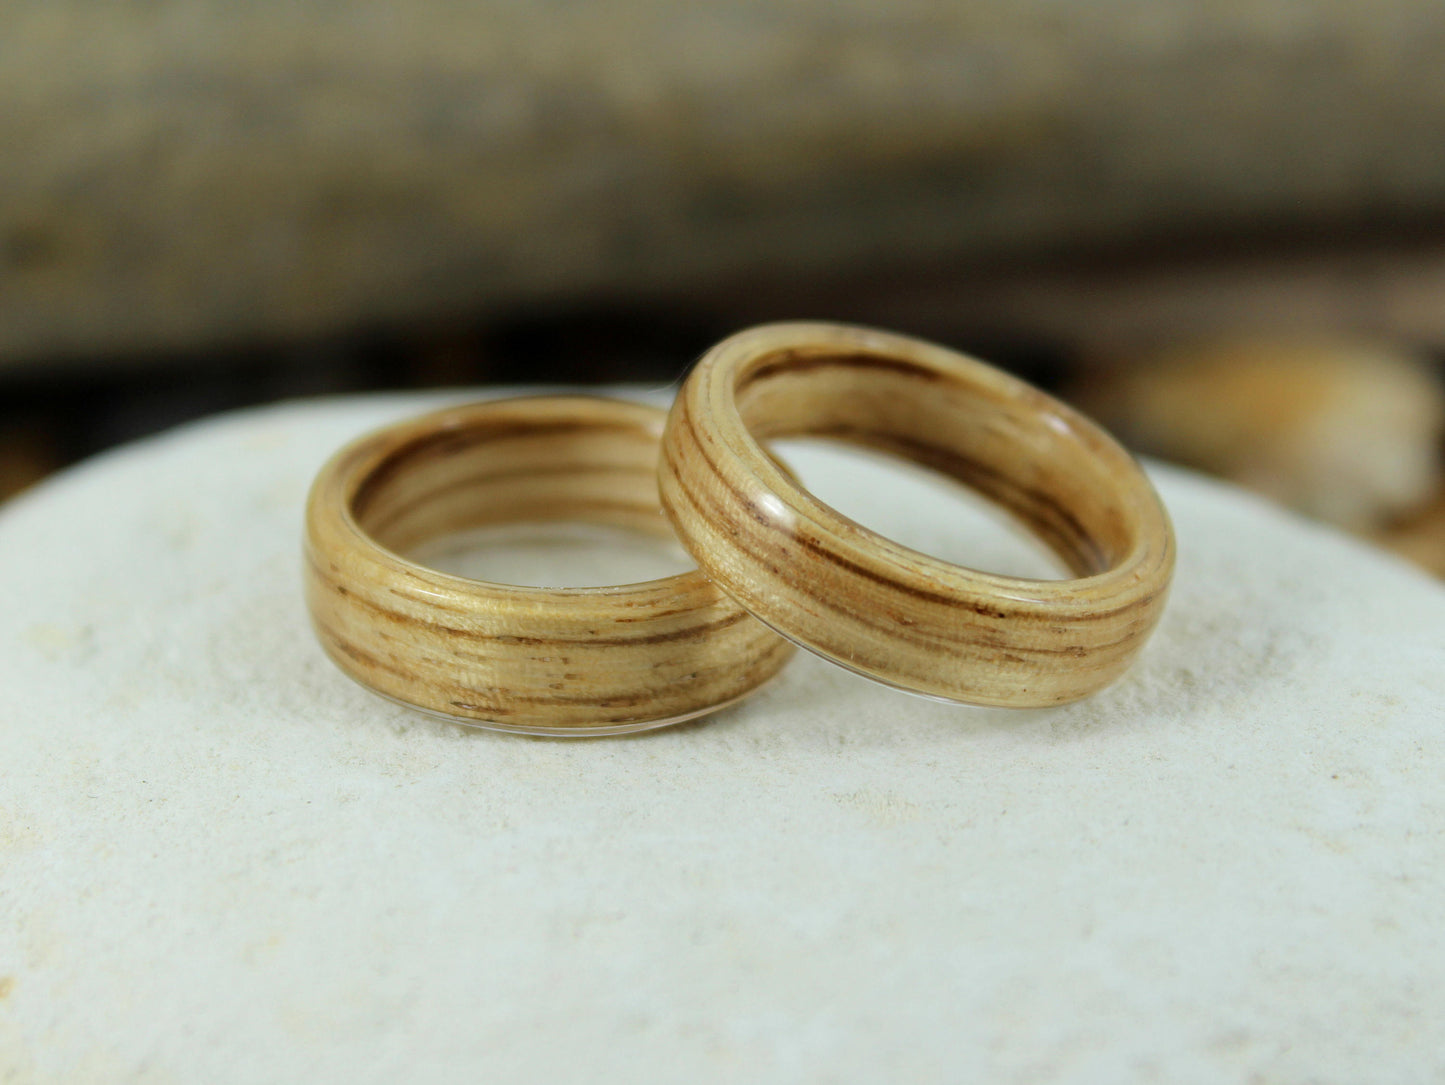 Zebrano Bent Wood Ring